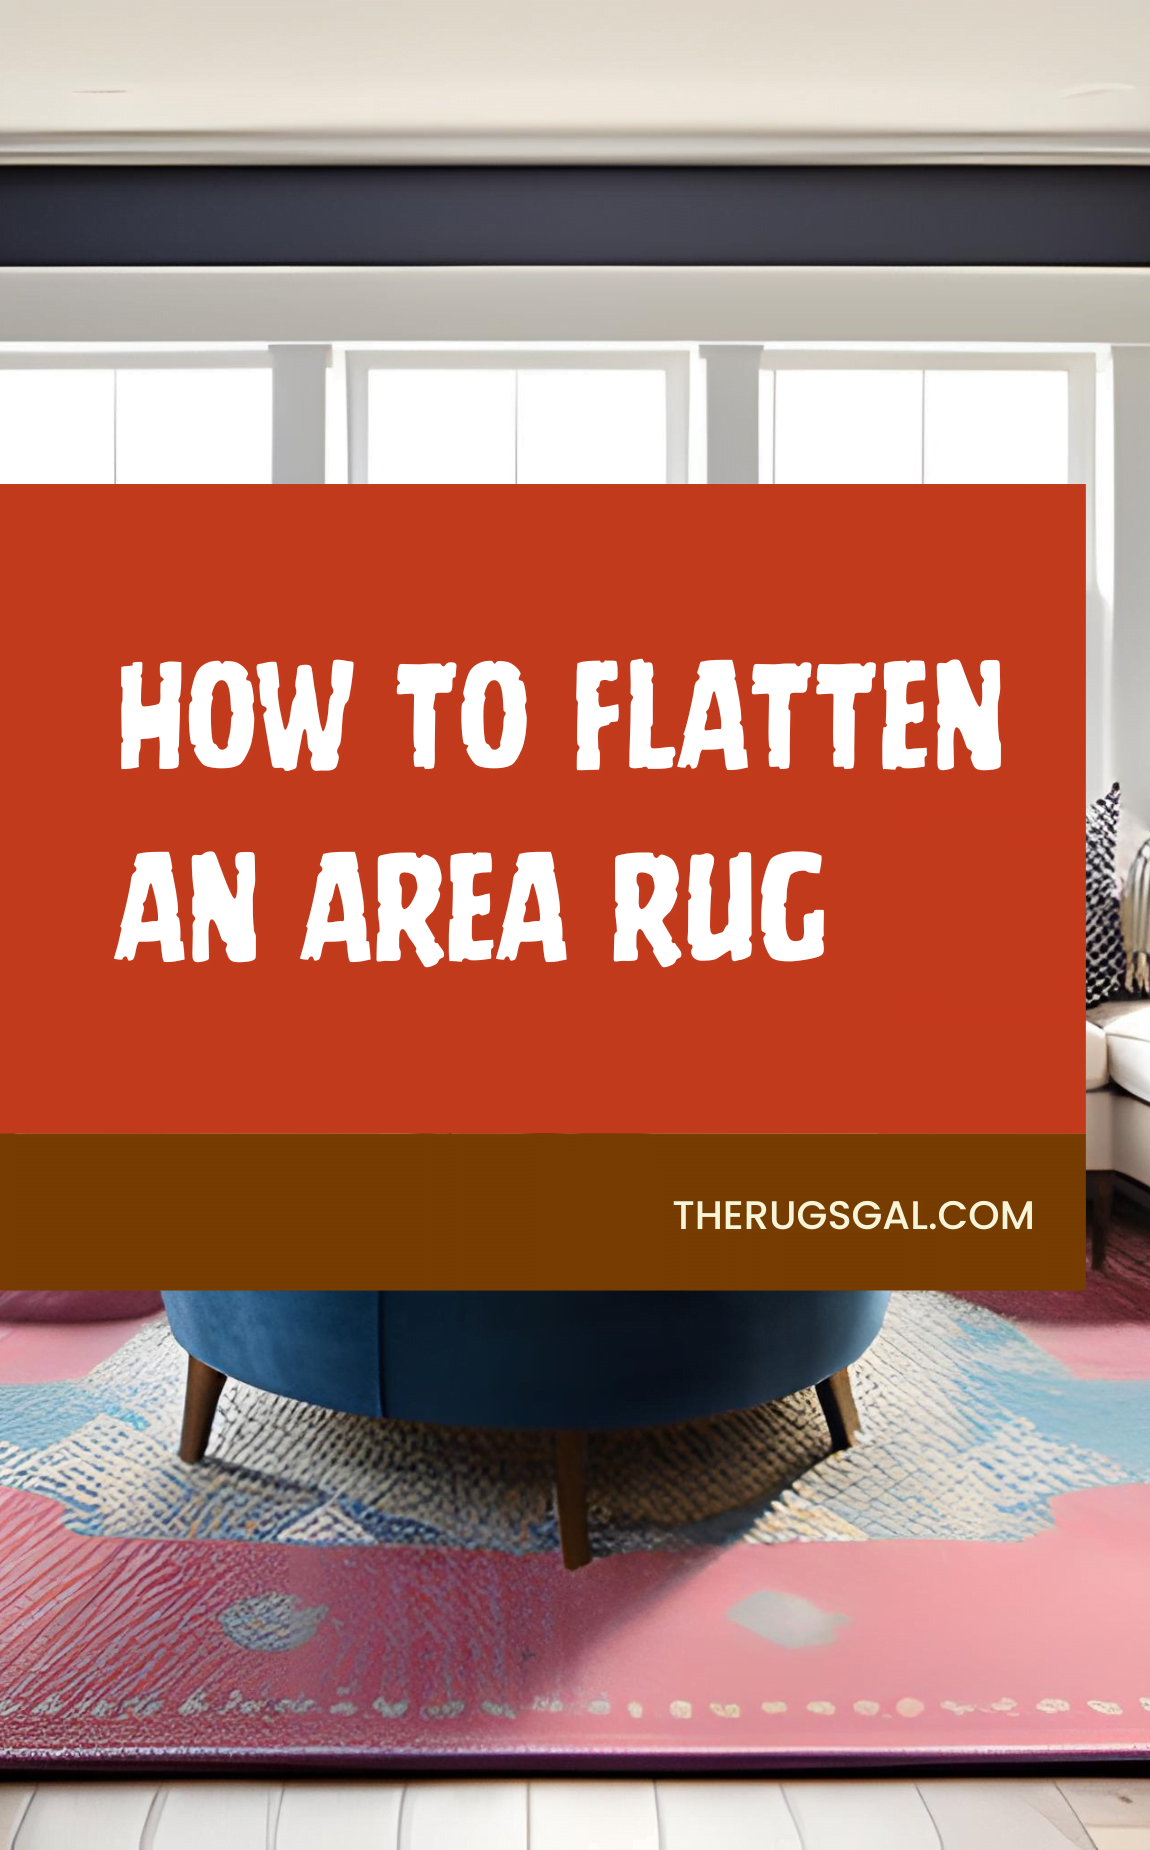 How to Flatten an Area Rug